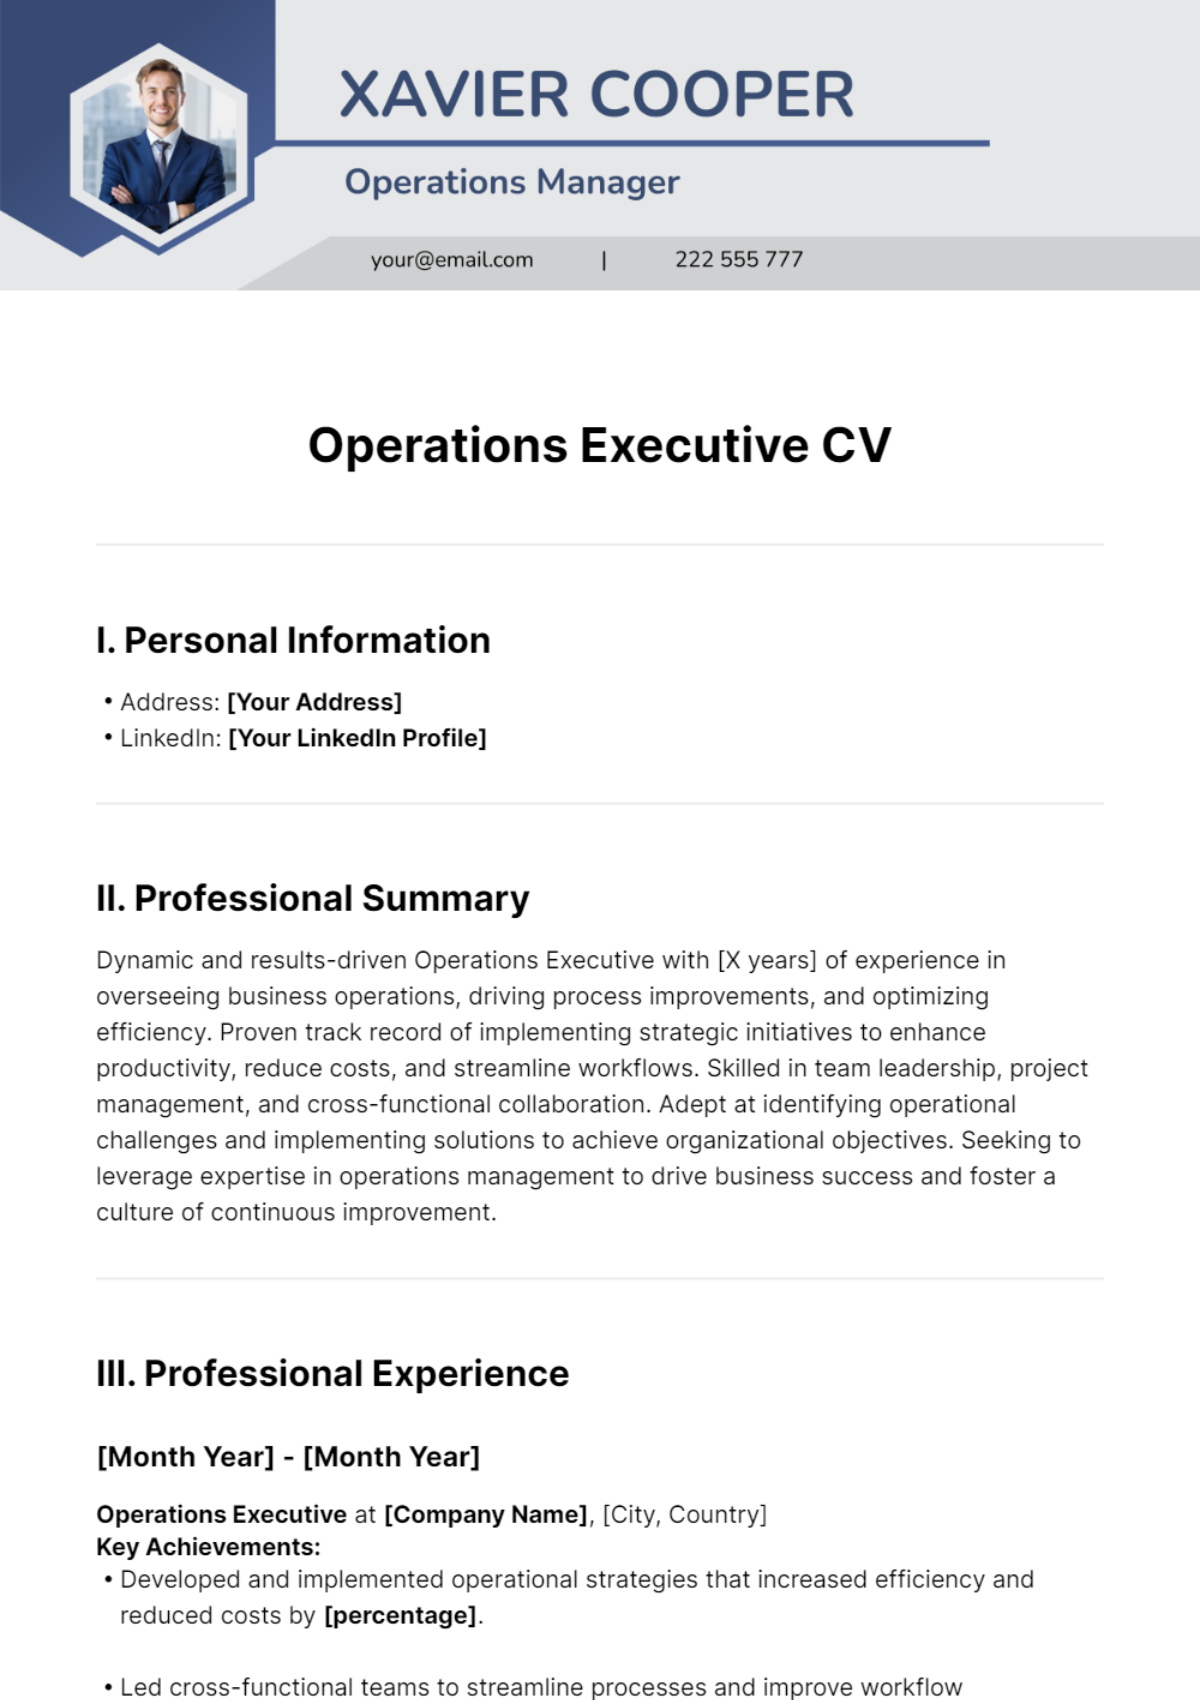 Operations Executive CV Template